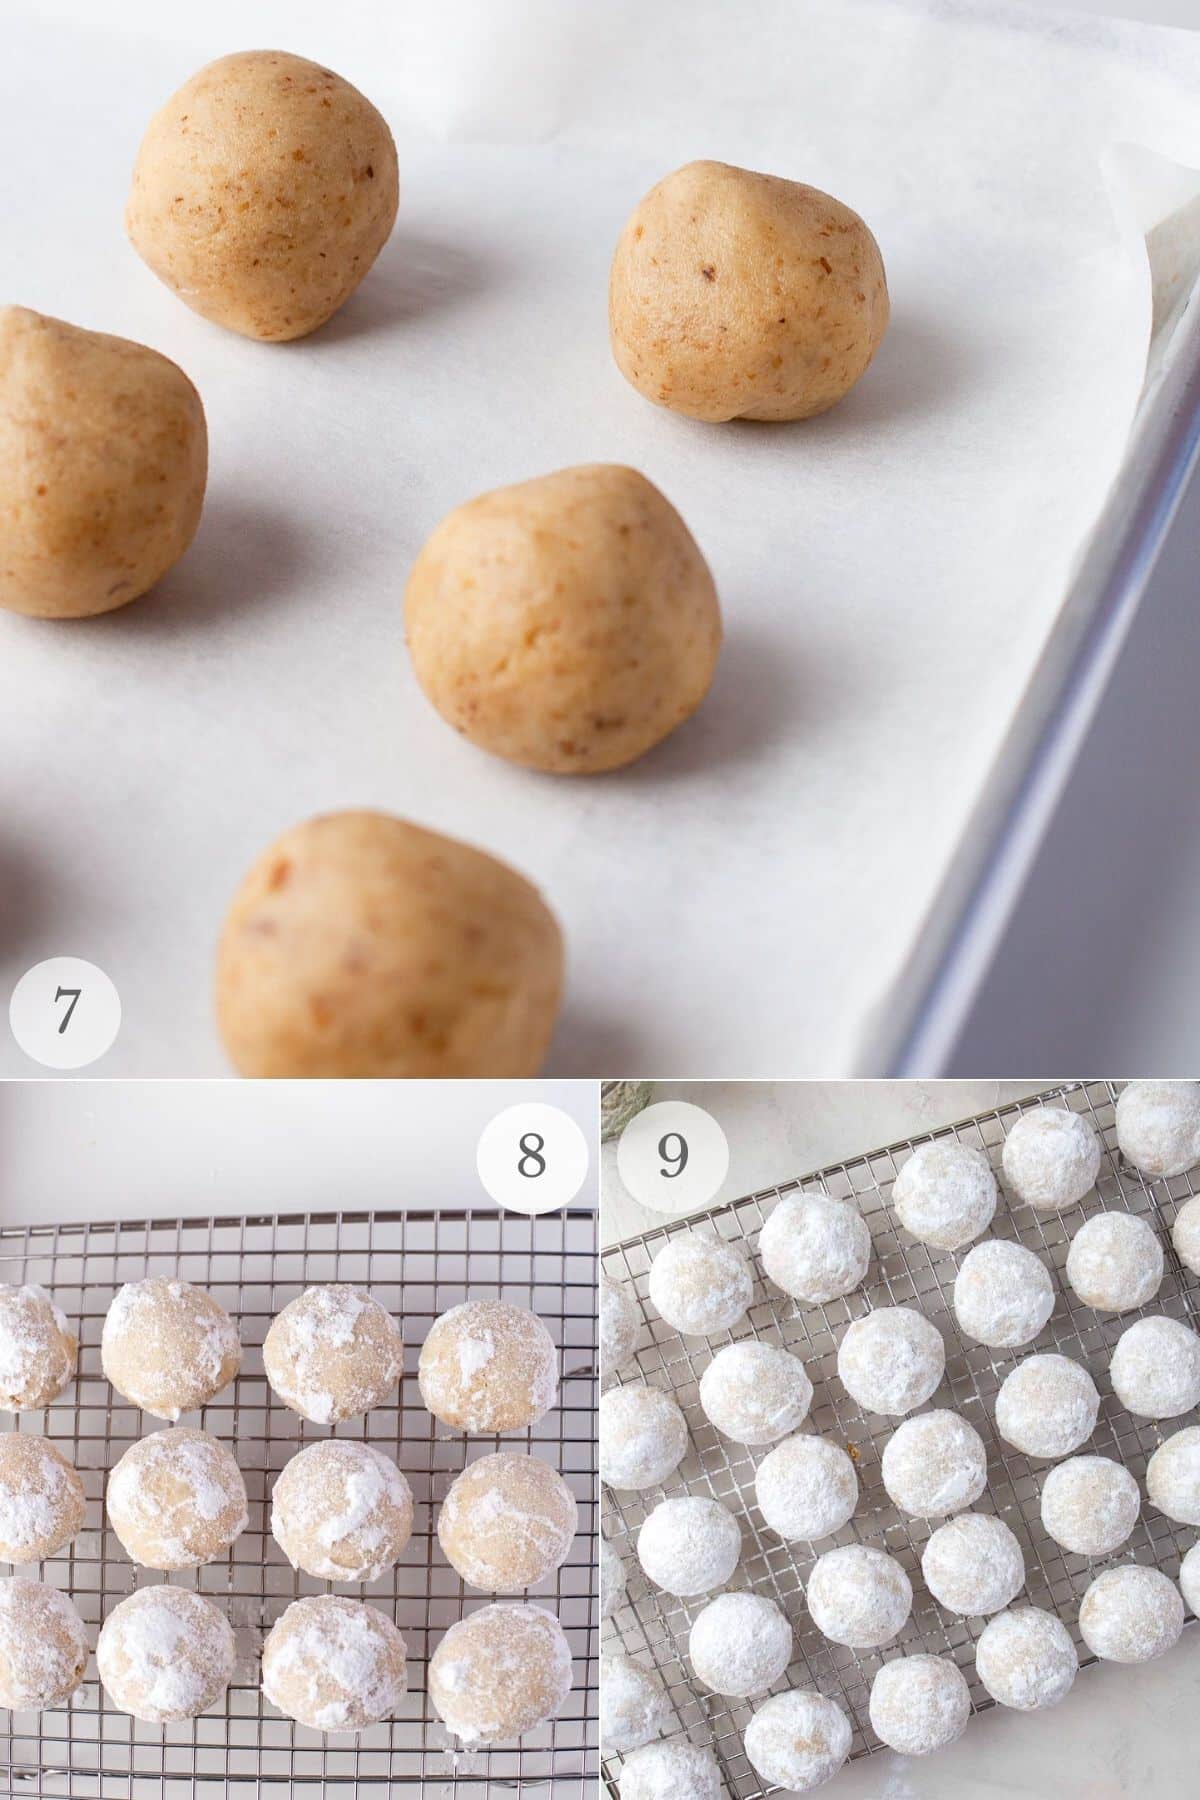 snowball cookies recipe steps 7-9